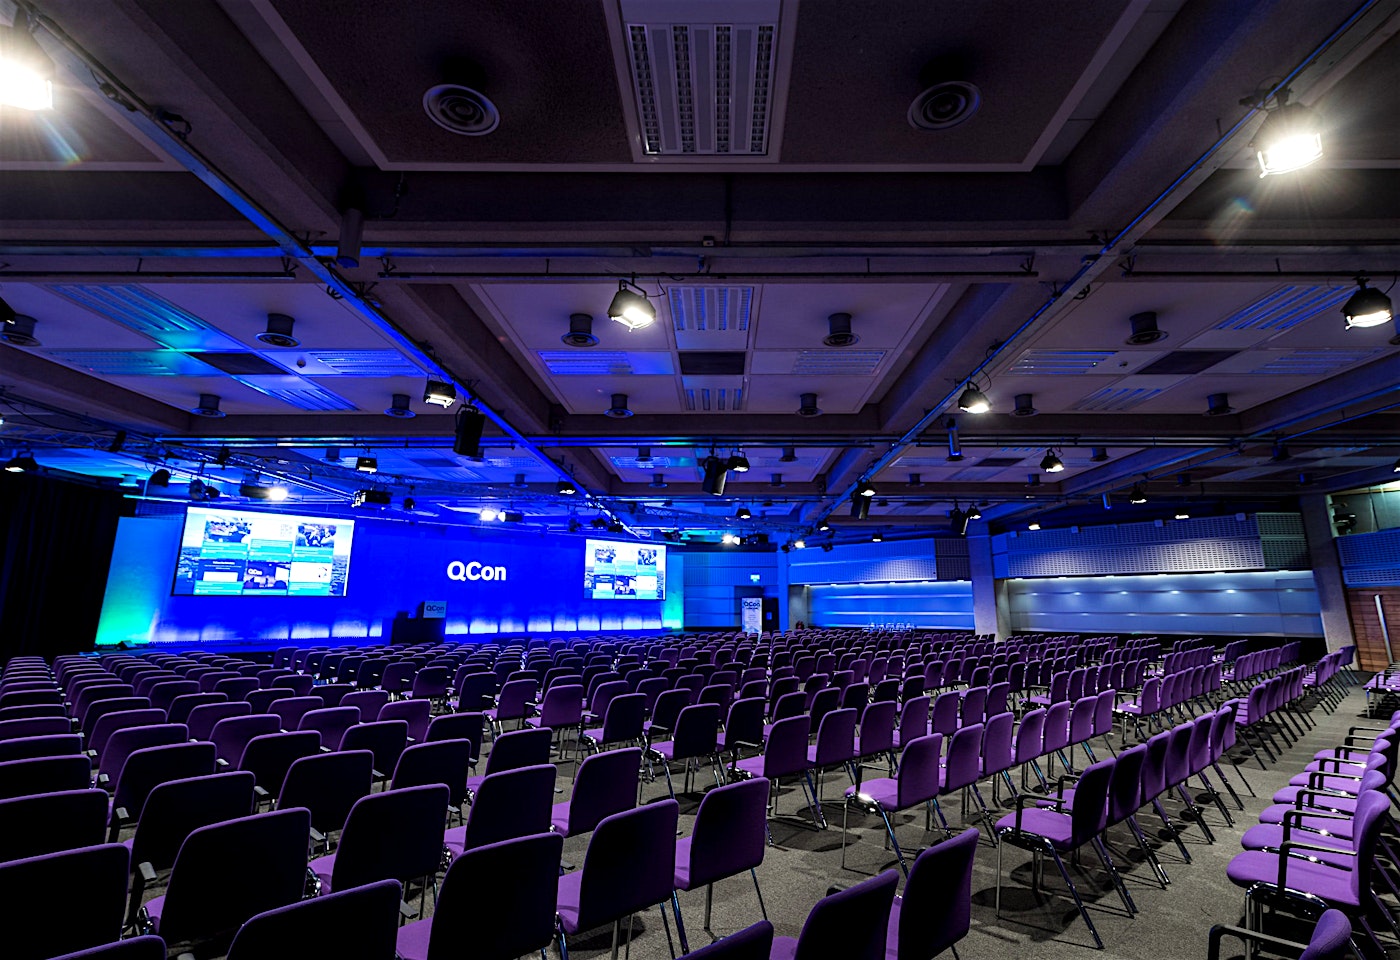 QEII london large conference centre